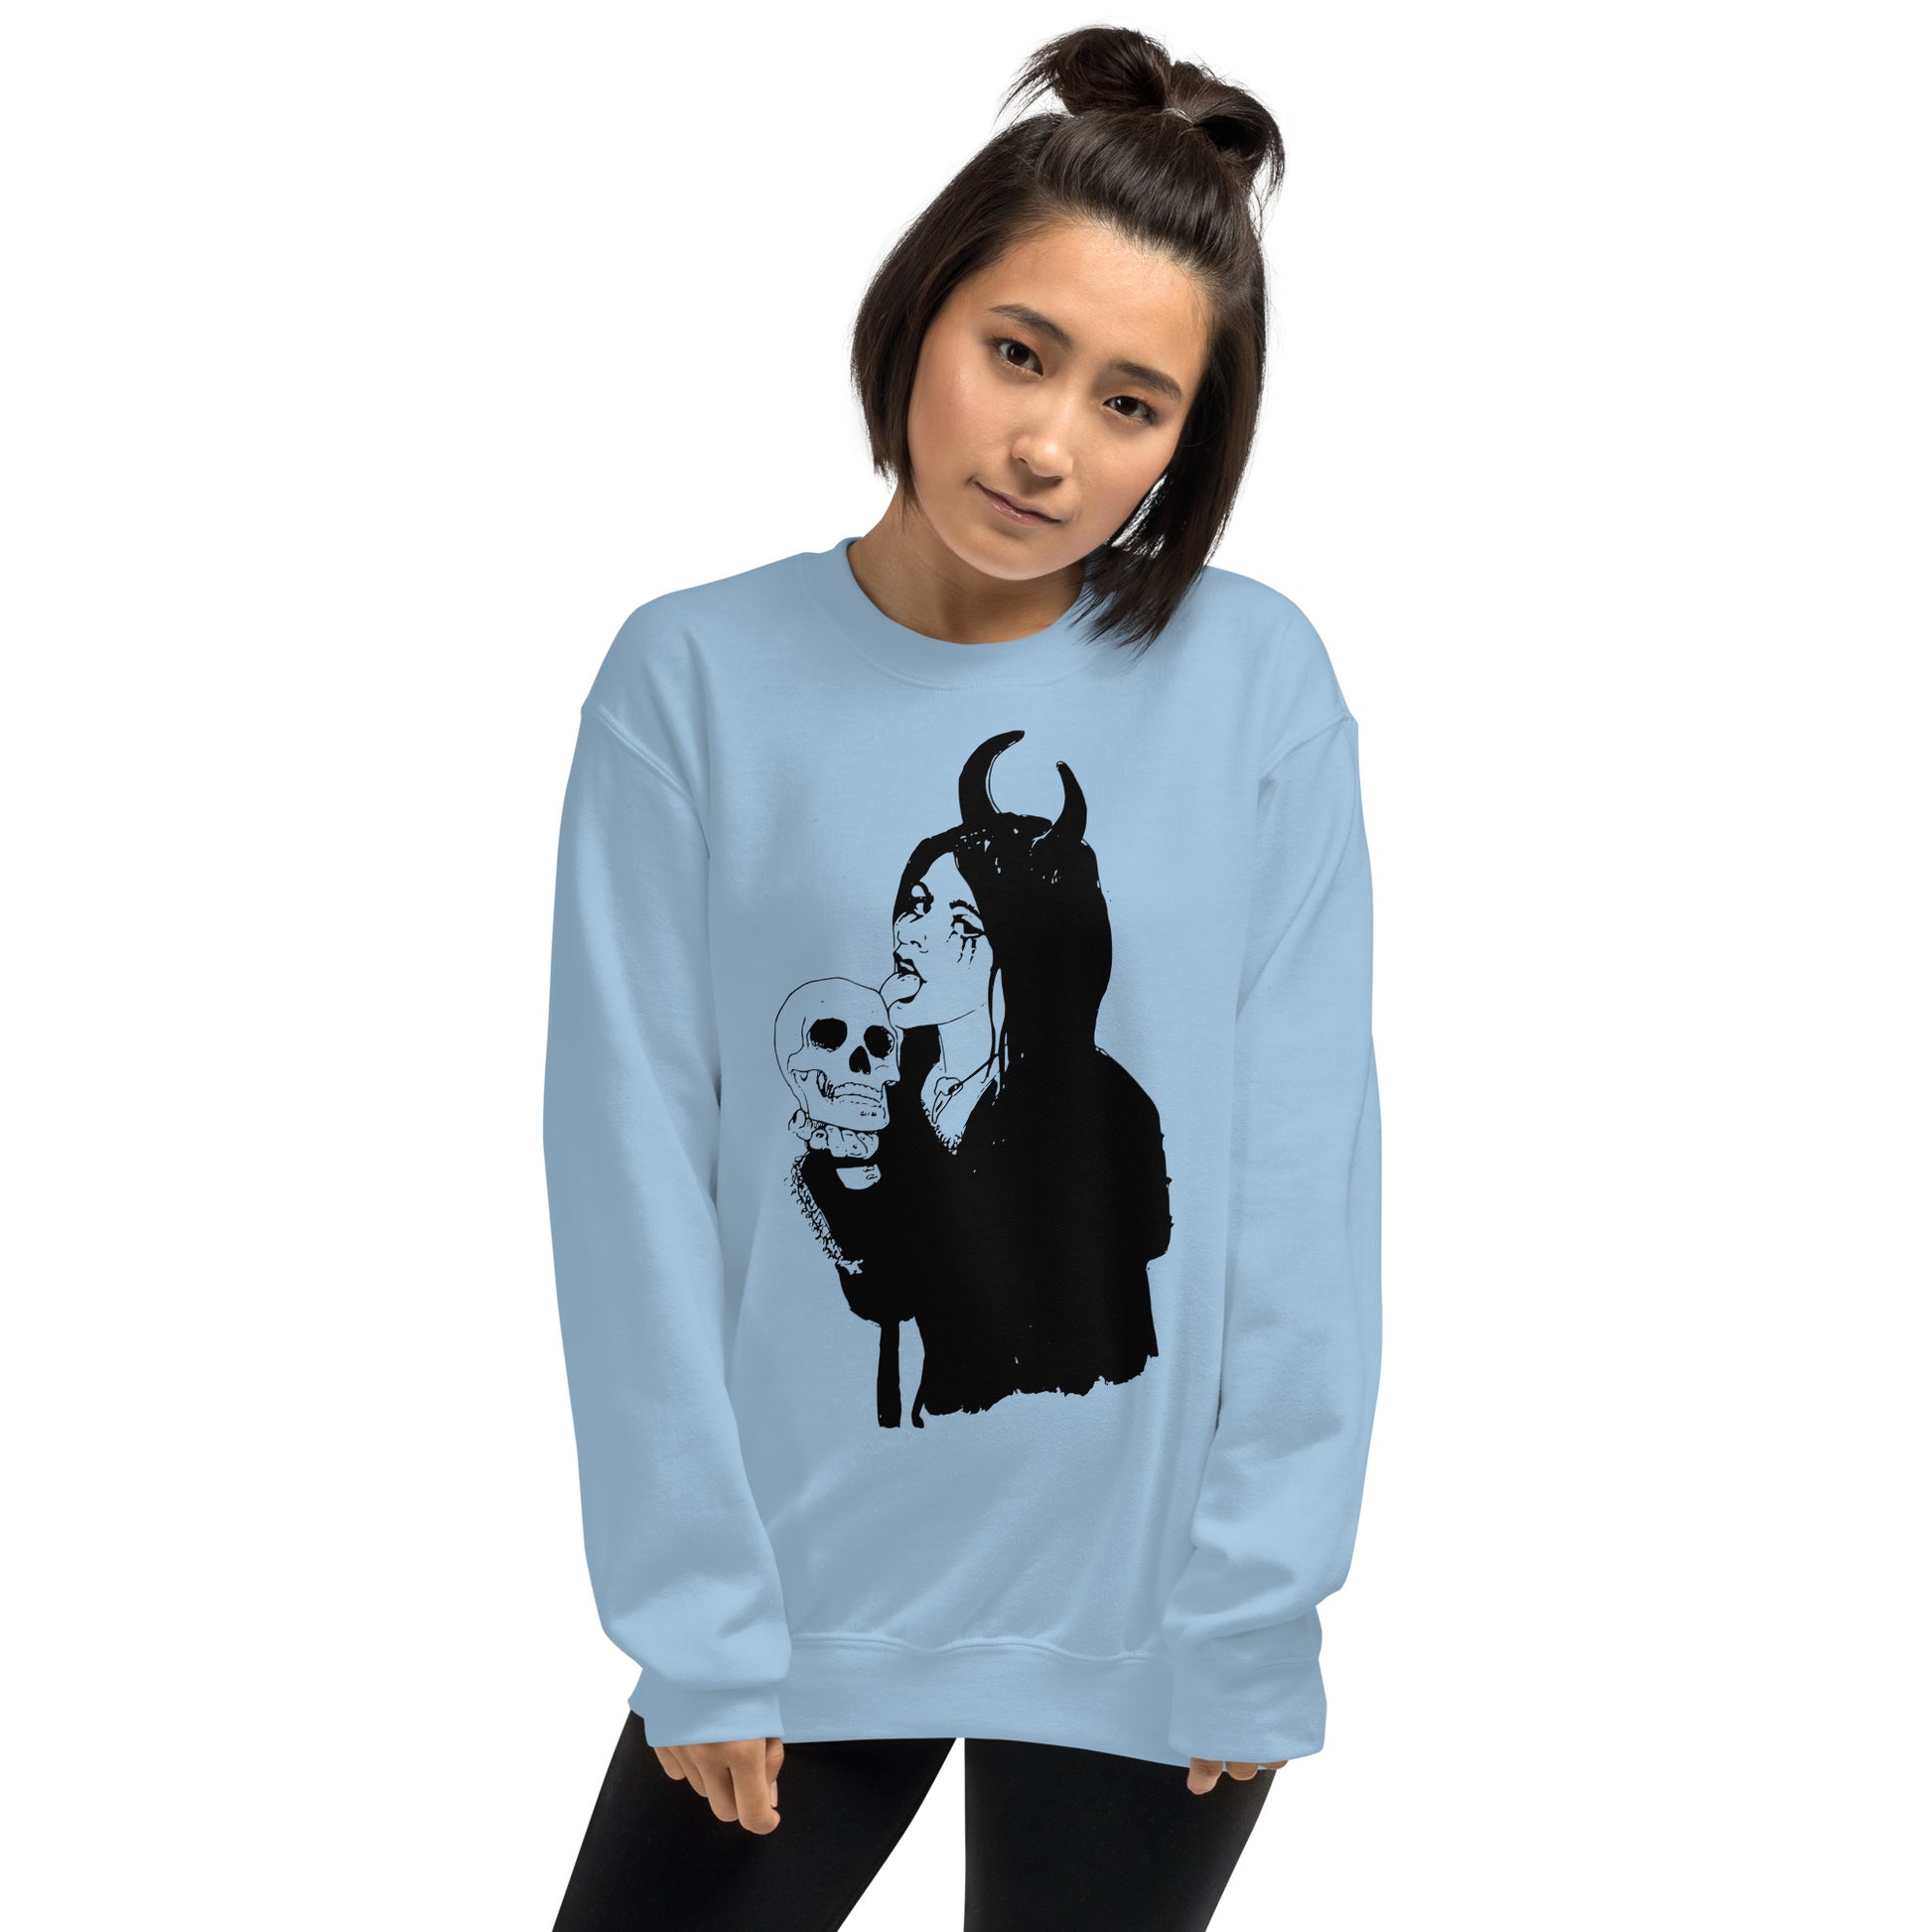 Light Blue Skull Sweatshirt Licking Woman